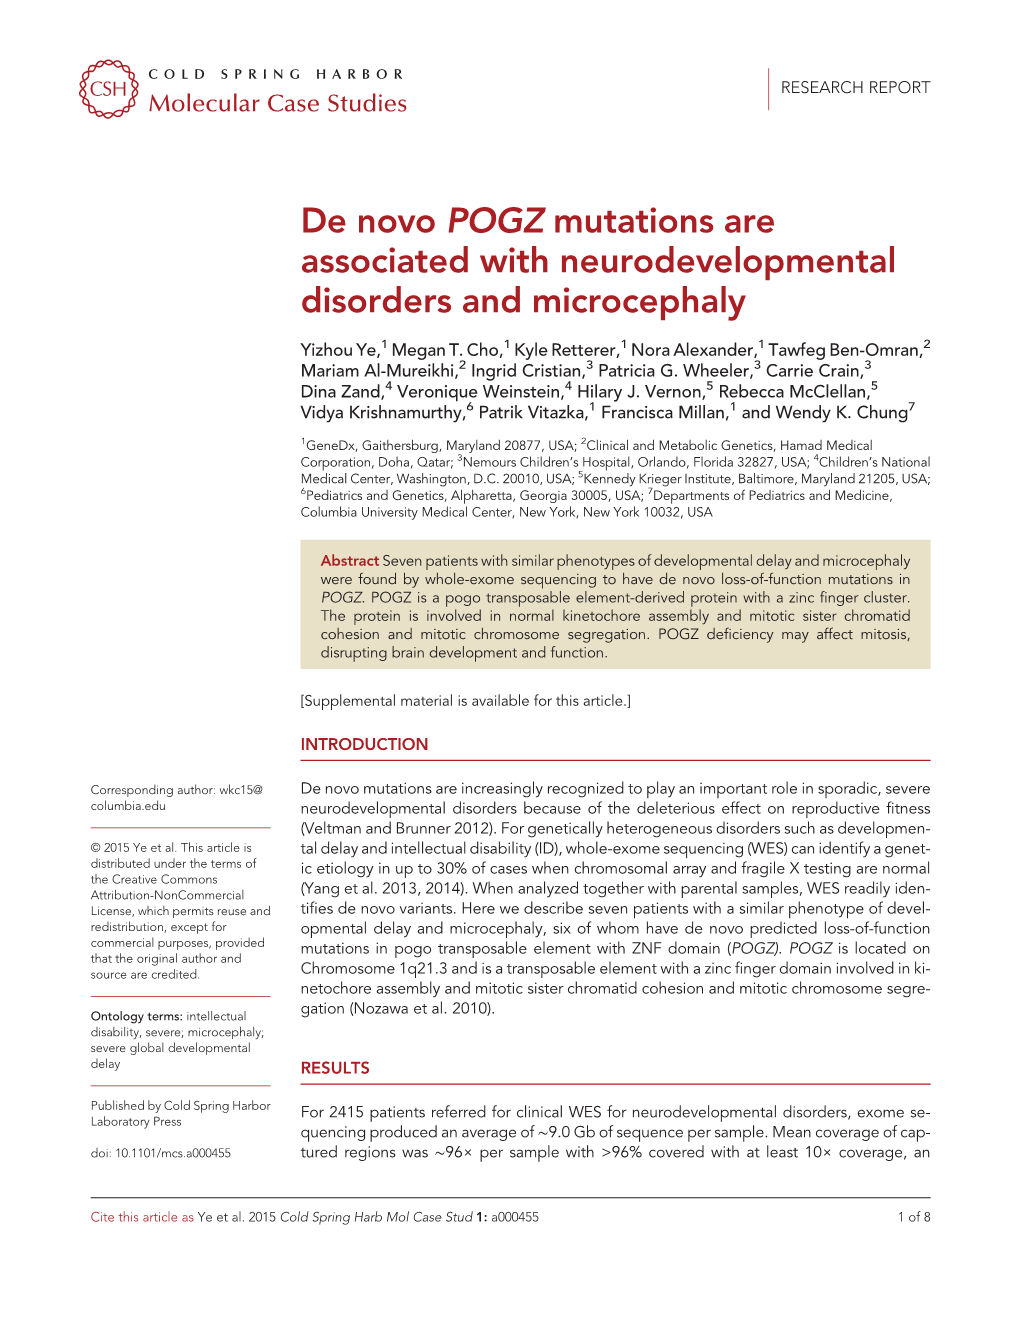 De Novo POGZ Mutations Are Associated with Neurodevelopmental Disorders and Microcephaly